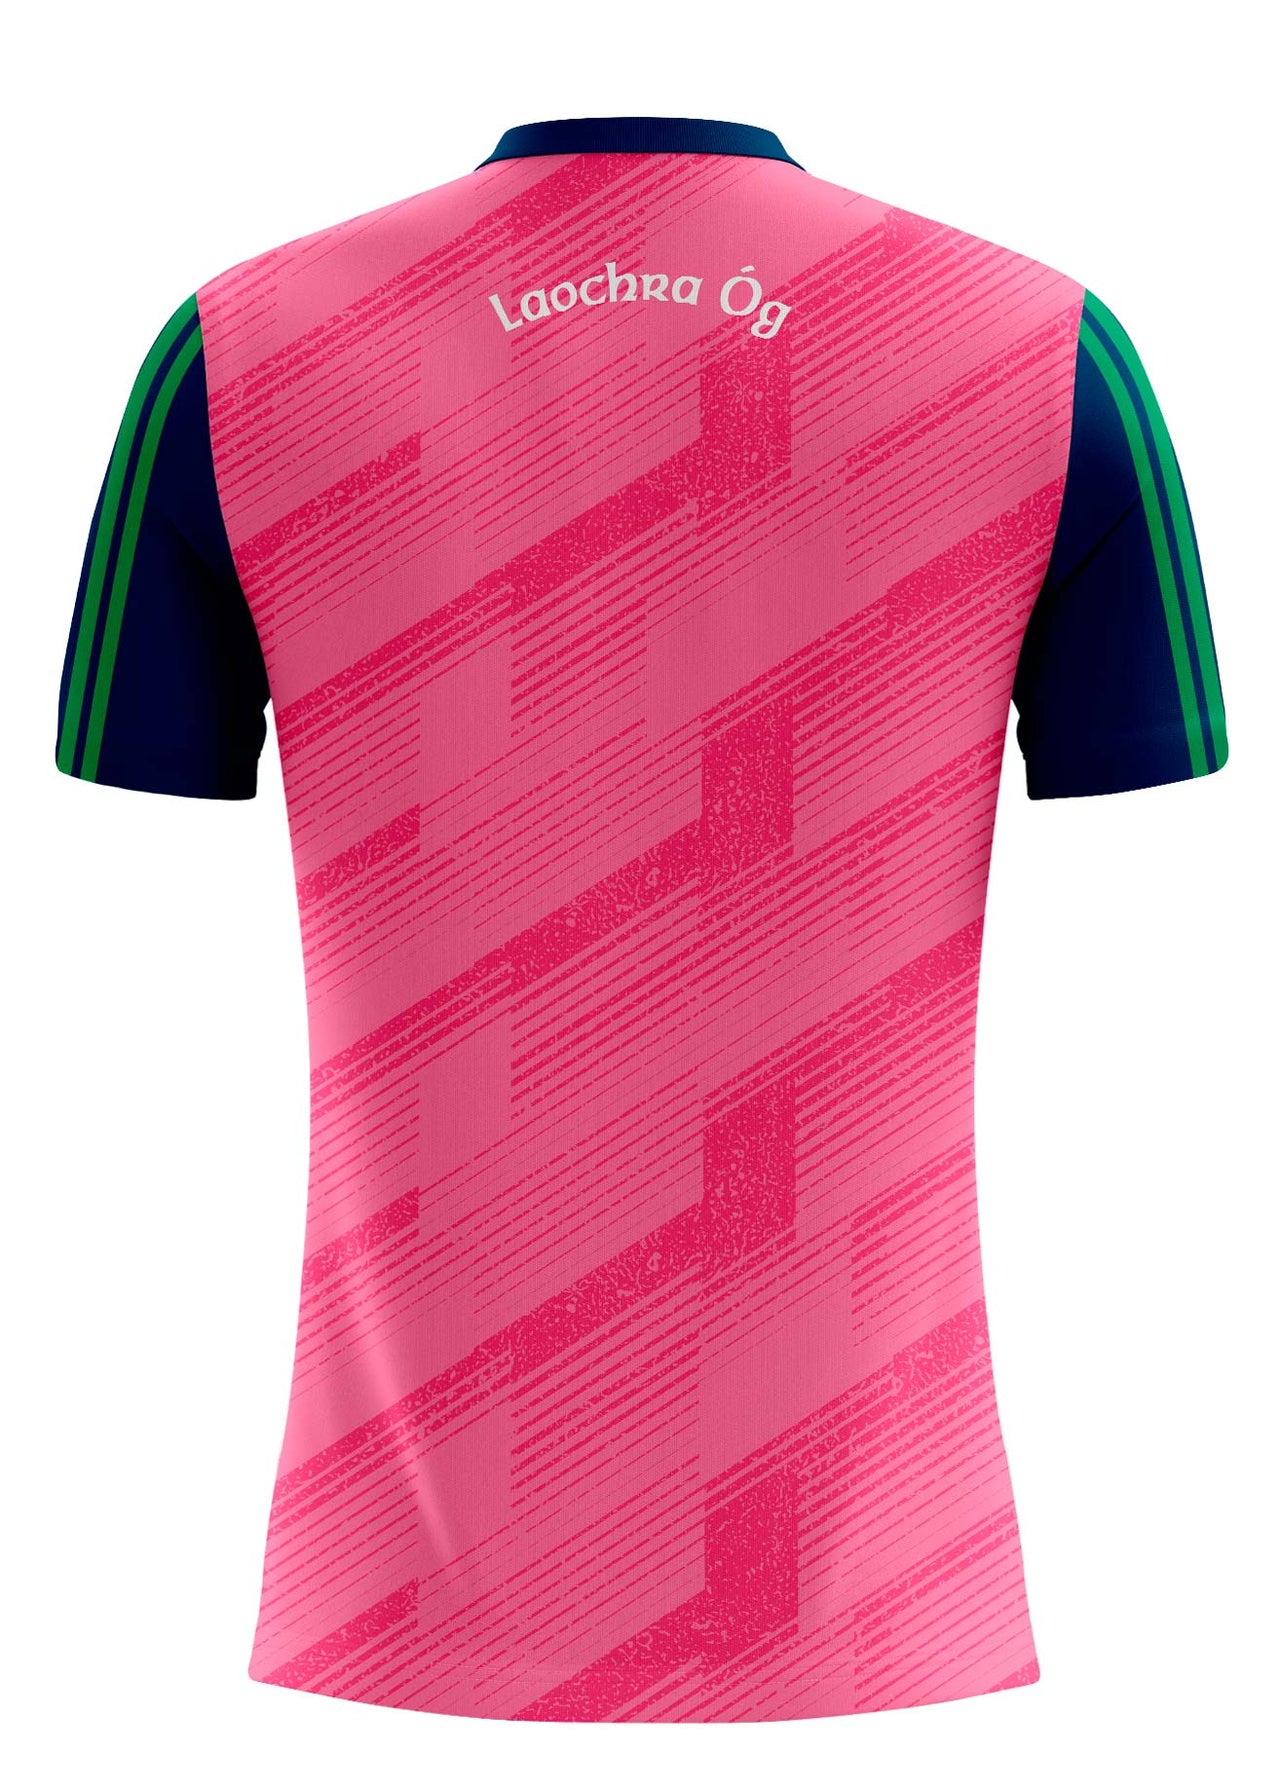 Laochra Óg Pink Hydro Training Jersey Player Fit Adult